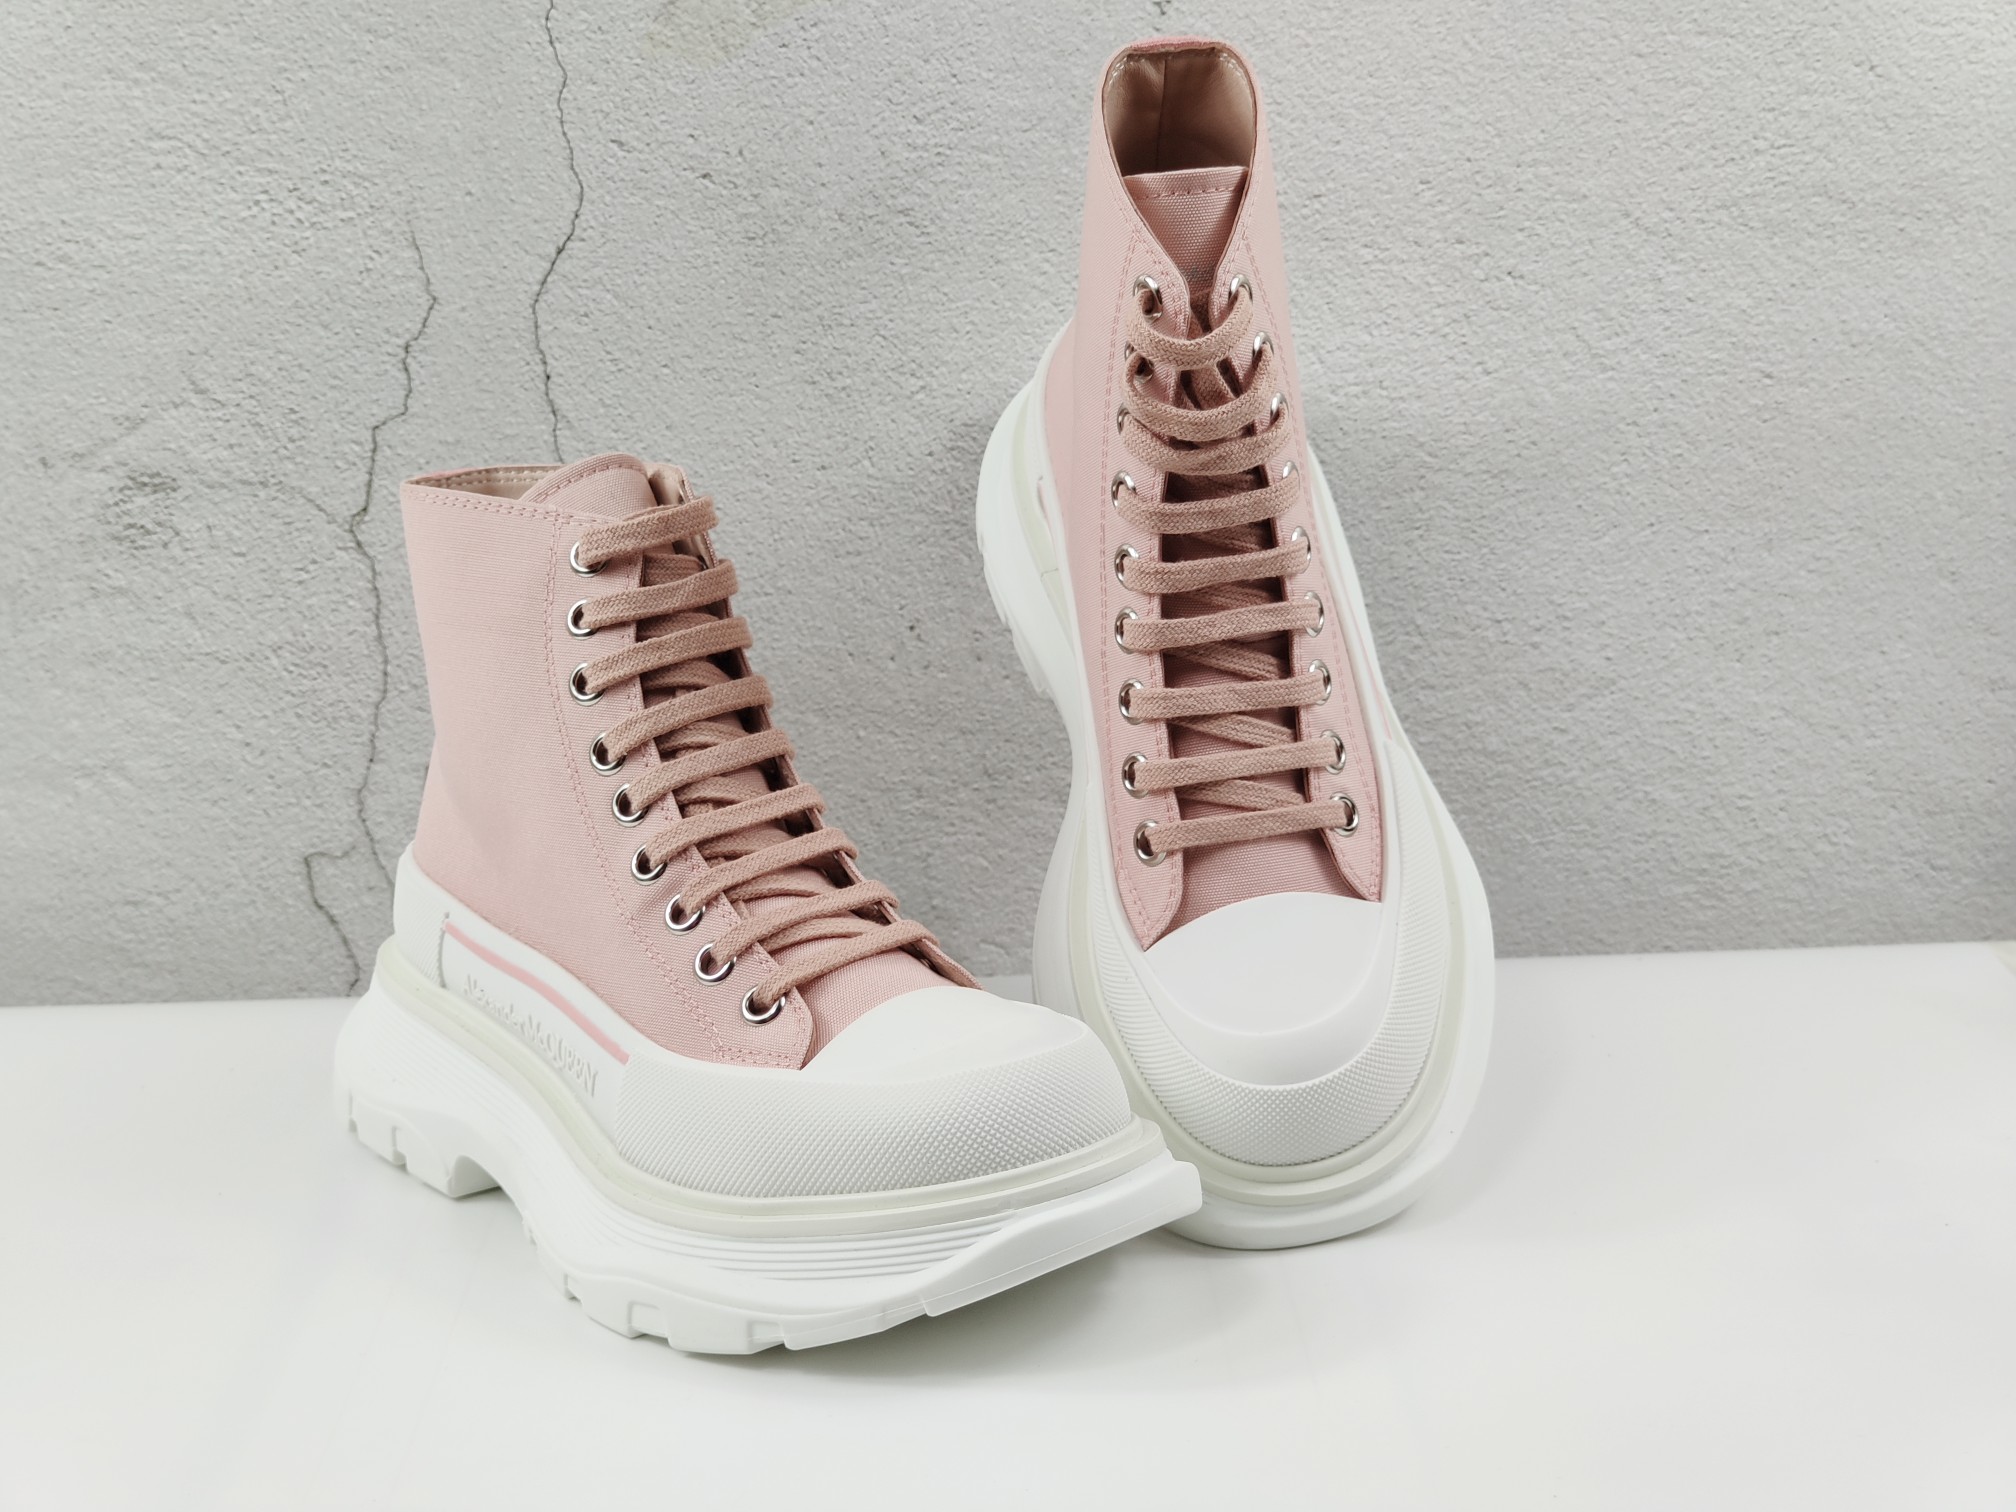 MCQ Sneaker Tread Slick Boot in Pink